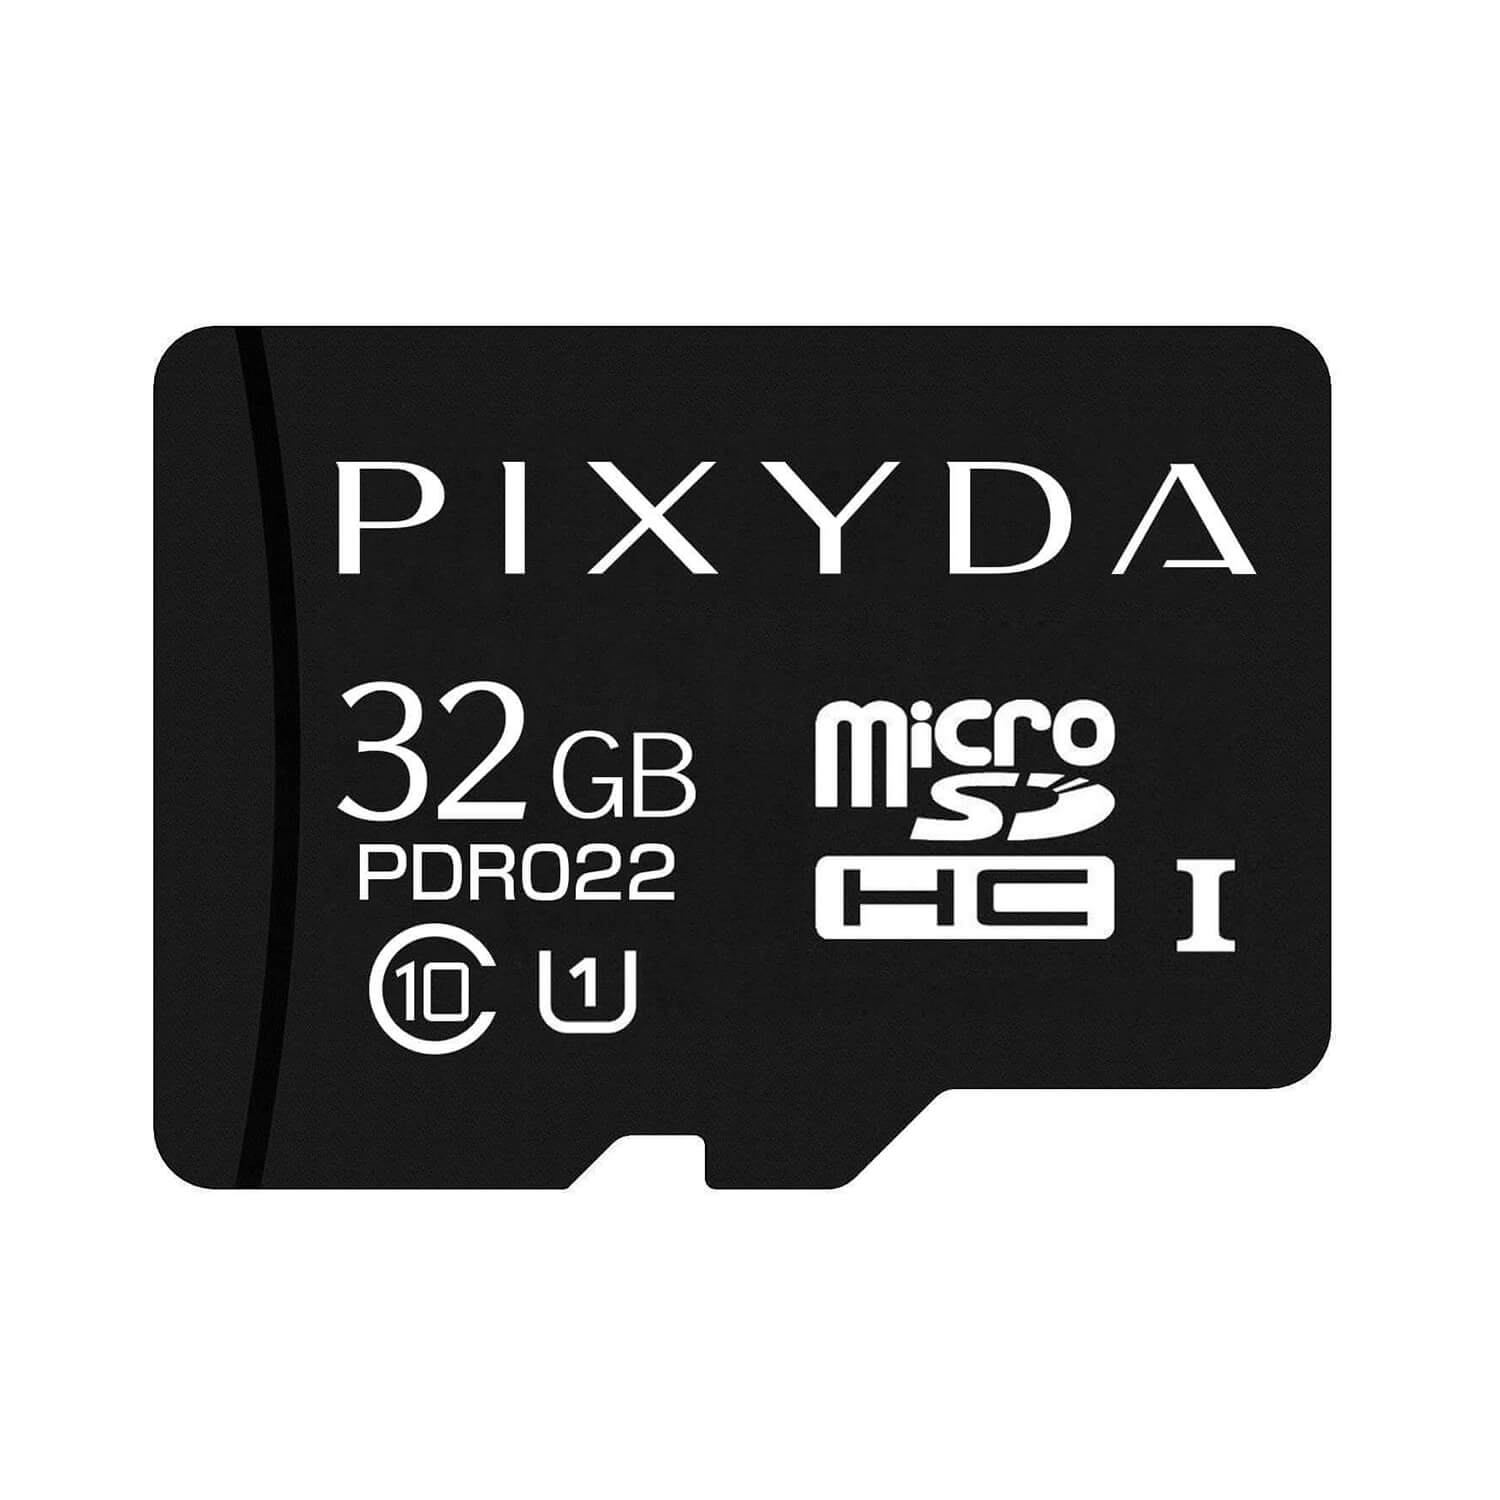 PDR750SV 製品の特徴｜360EYEドライブレコーダーG｜PIXYDA（ピクシーダ）